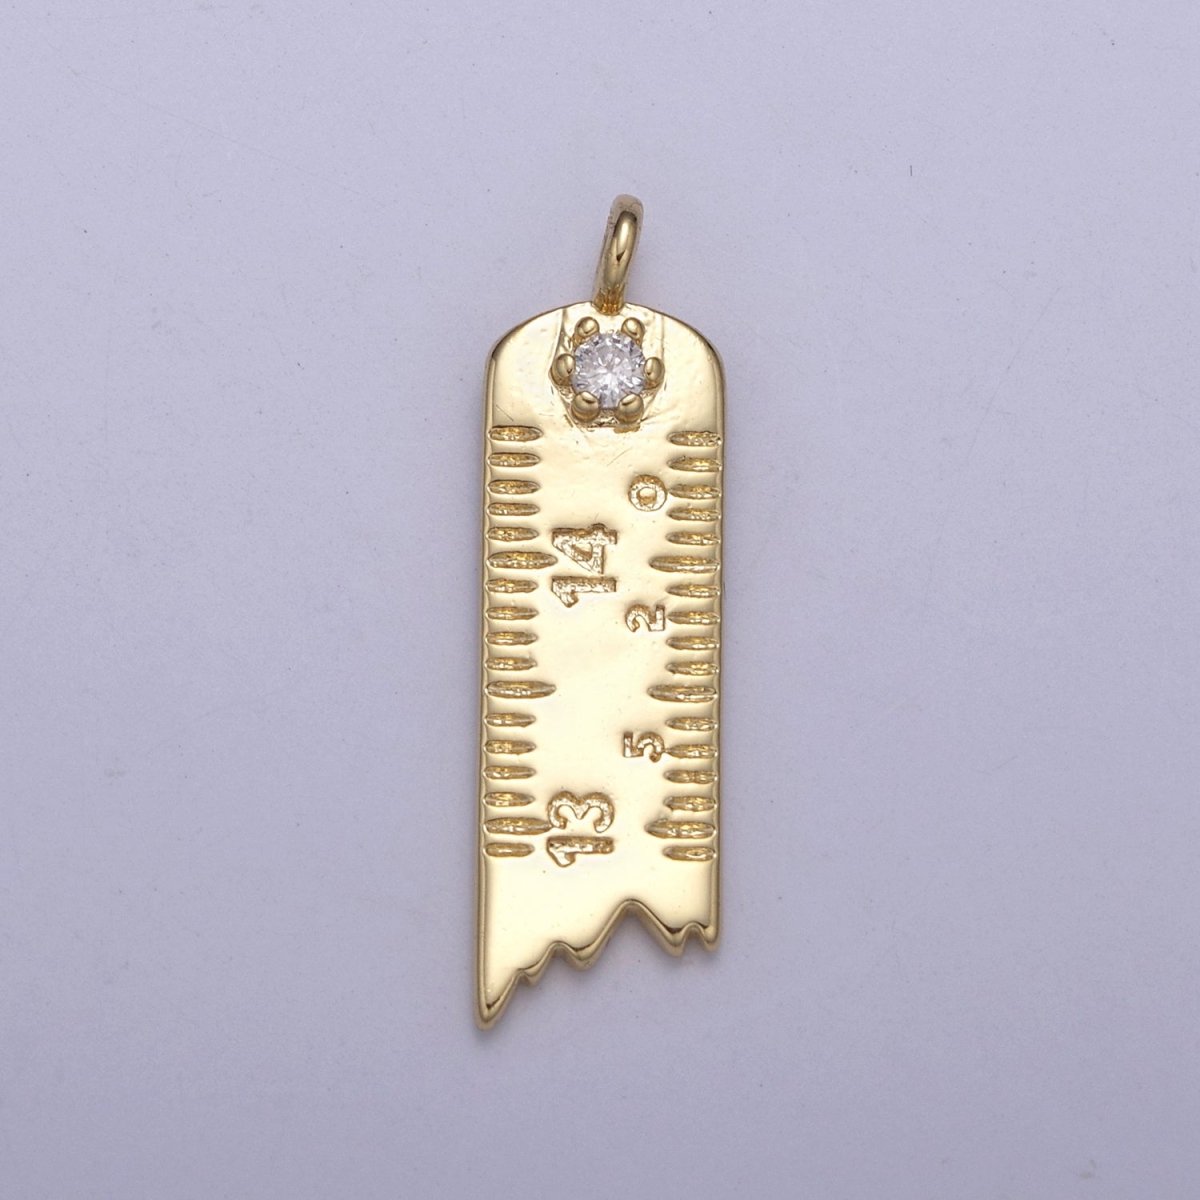 Dainty Ruler Charm Gold / Silver Ruler Pendant for Necklace Bracelet Earring Component N-369 N-370 - DLUXCA